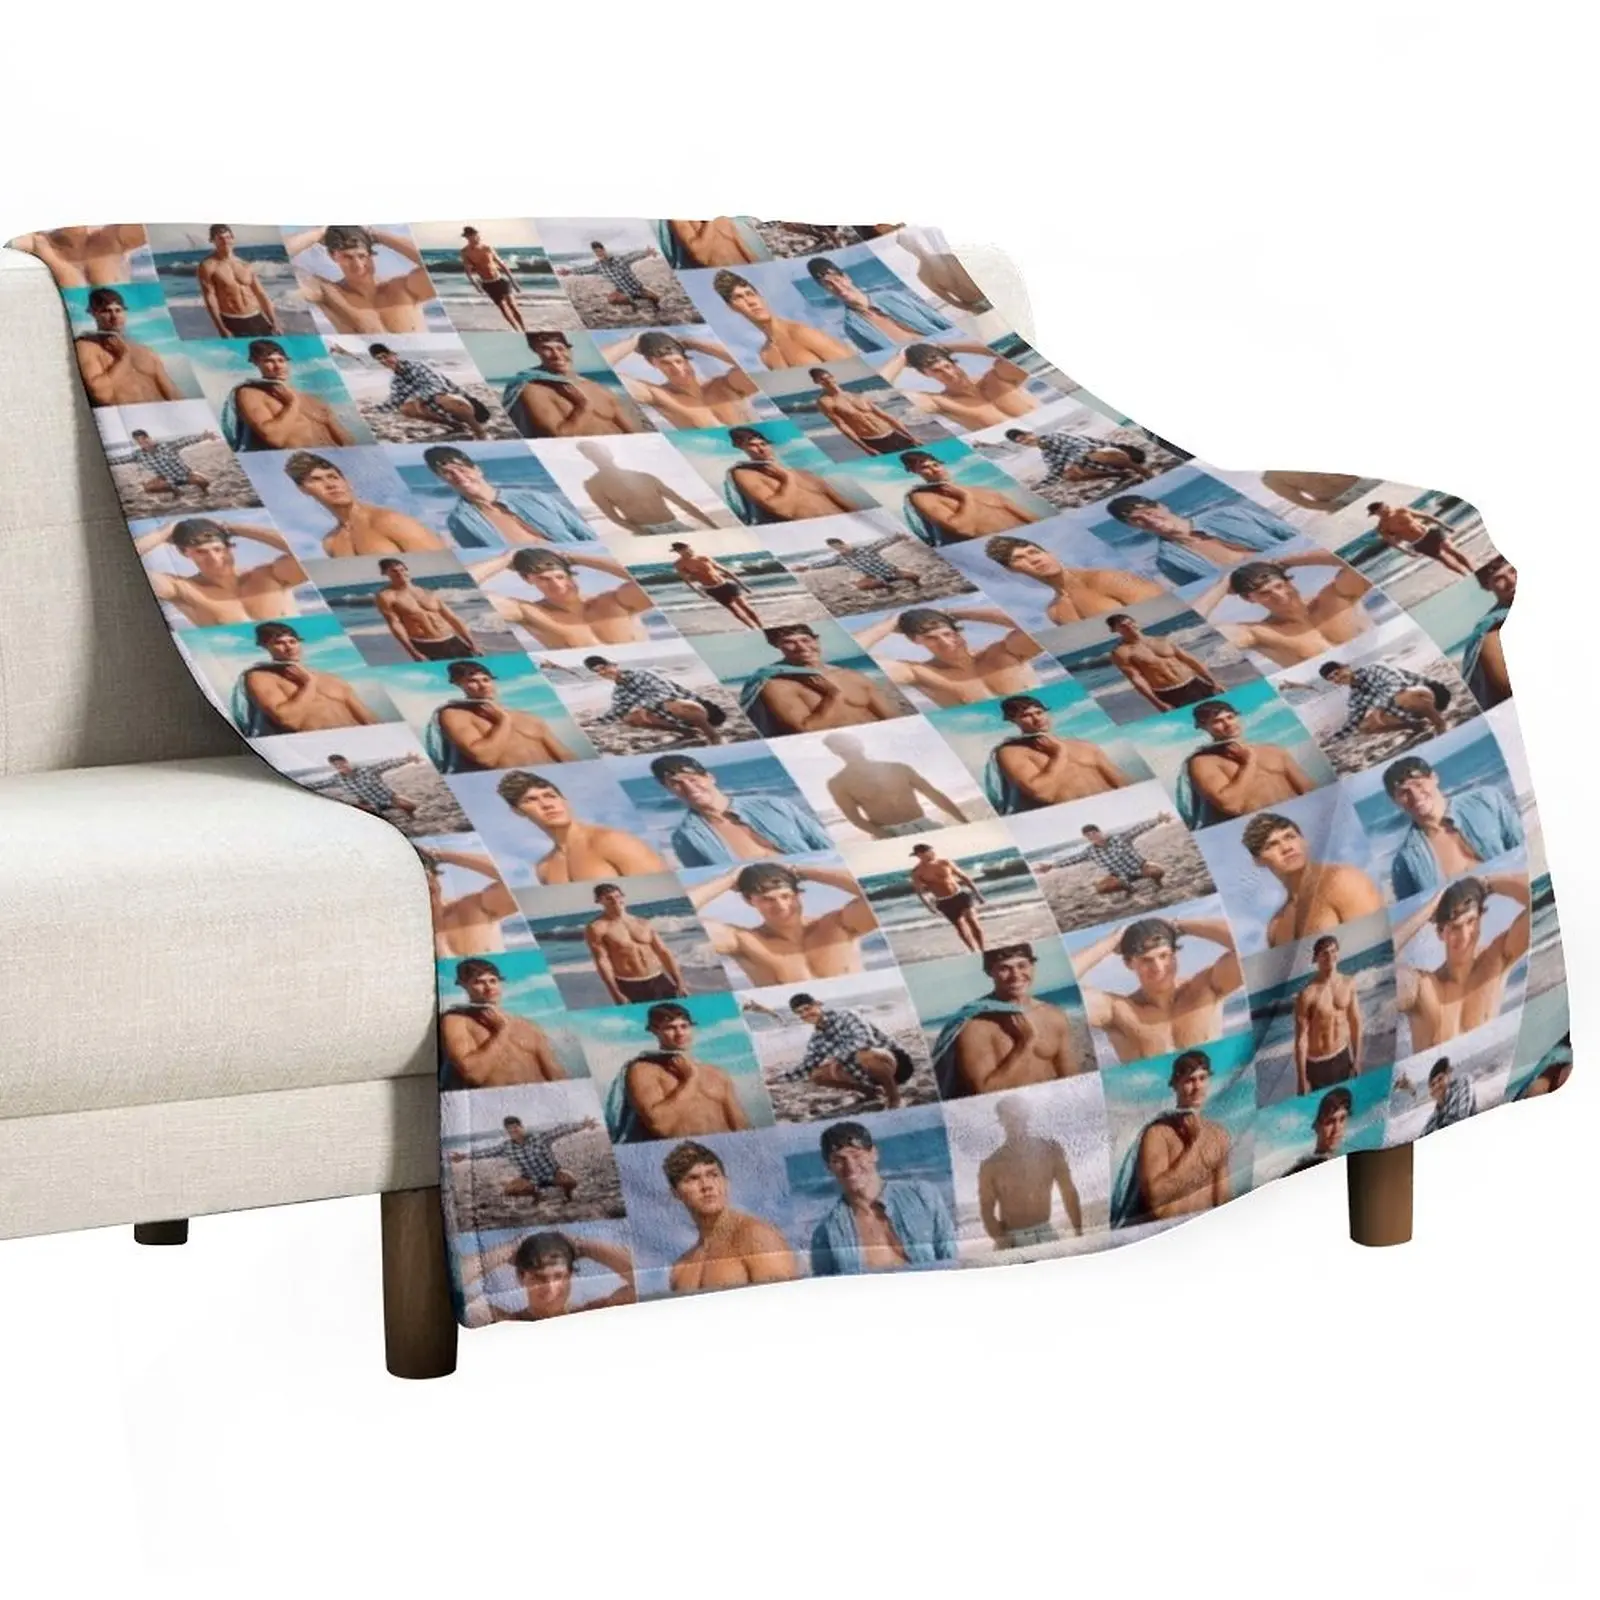 

Noah beck collage Throw Blanket throw blanket for sofa Blankets For Sofas Luxury Throw Blanket Luxury Thicken Blanket